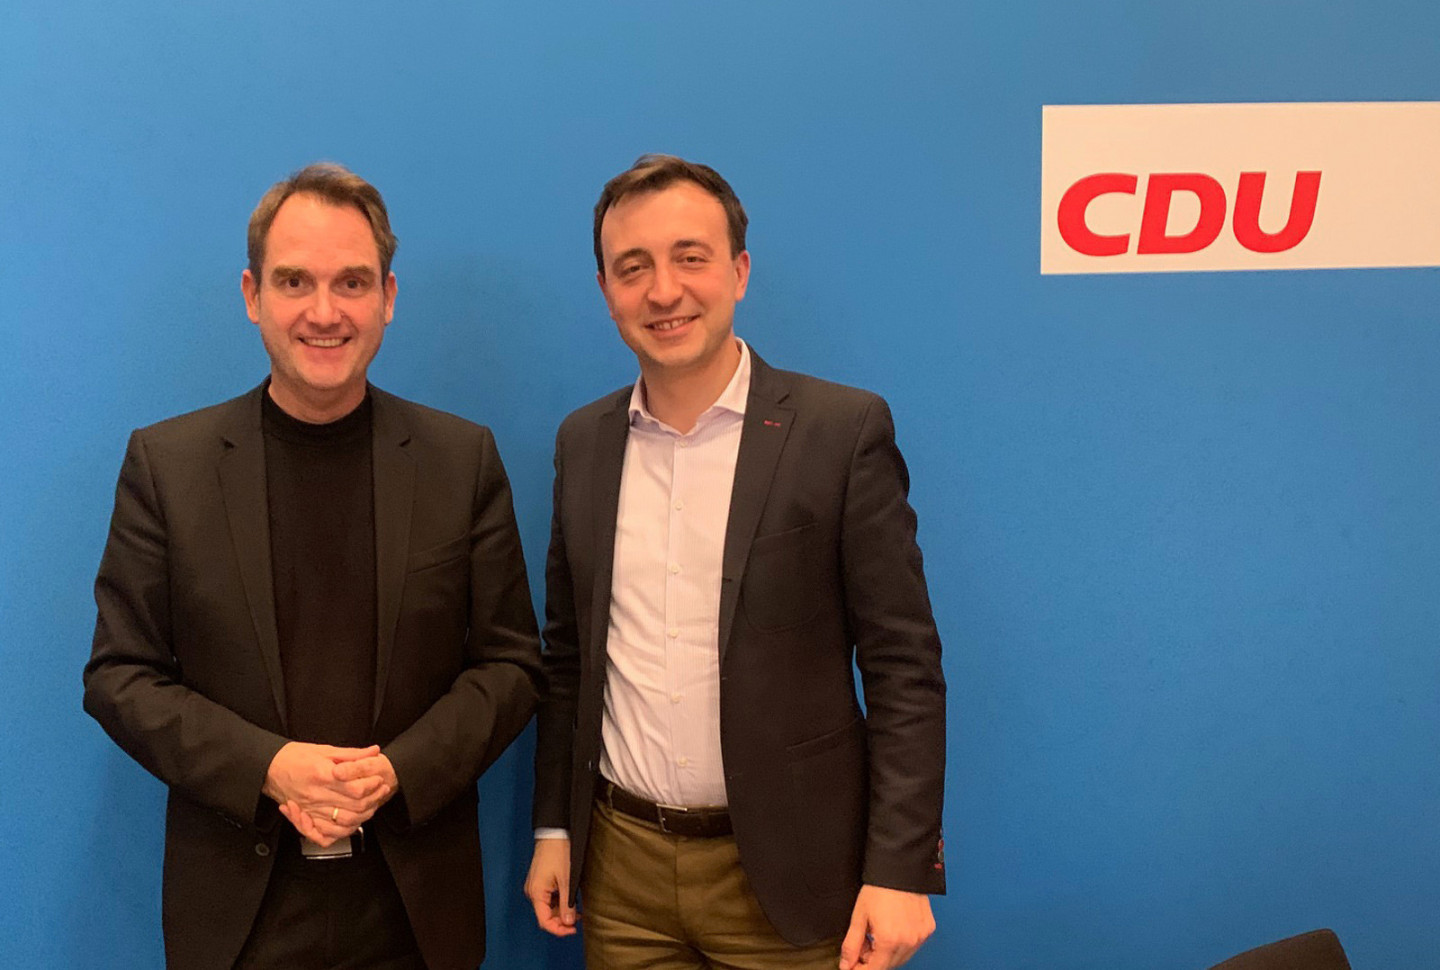 CDU Generalsekretär Paul Ziemiak (rechts) und GRÜN CEO Dr. Oliver Grün (links) bei einer Besprechung zum VEWA-Softwareprojekt in Berlin.